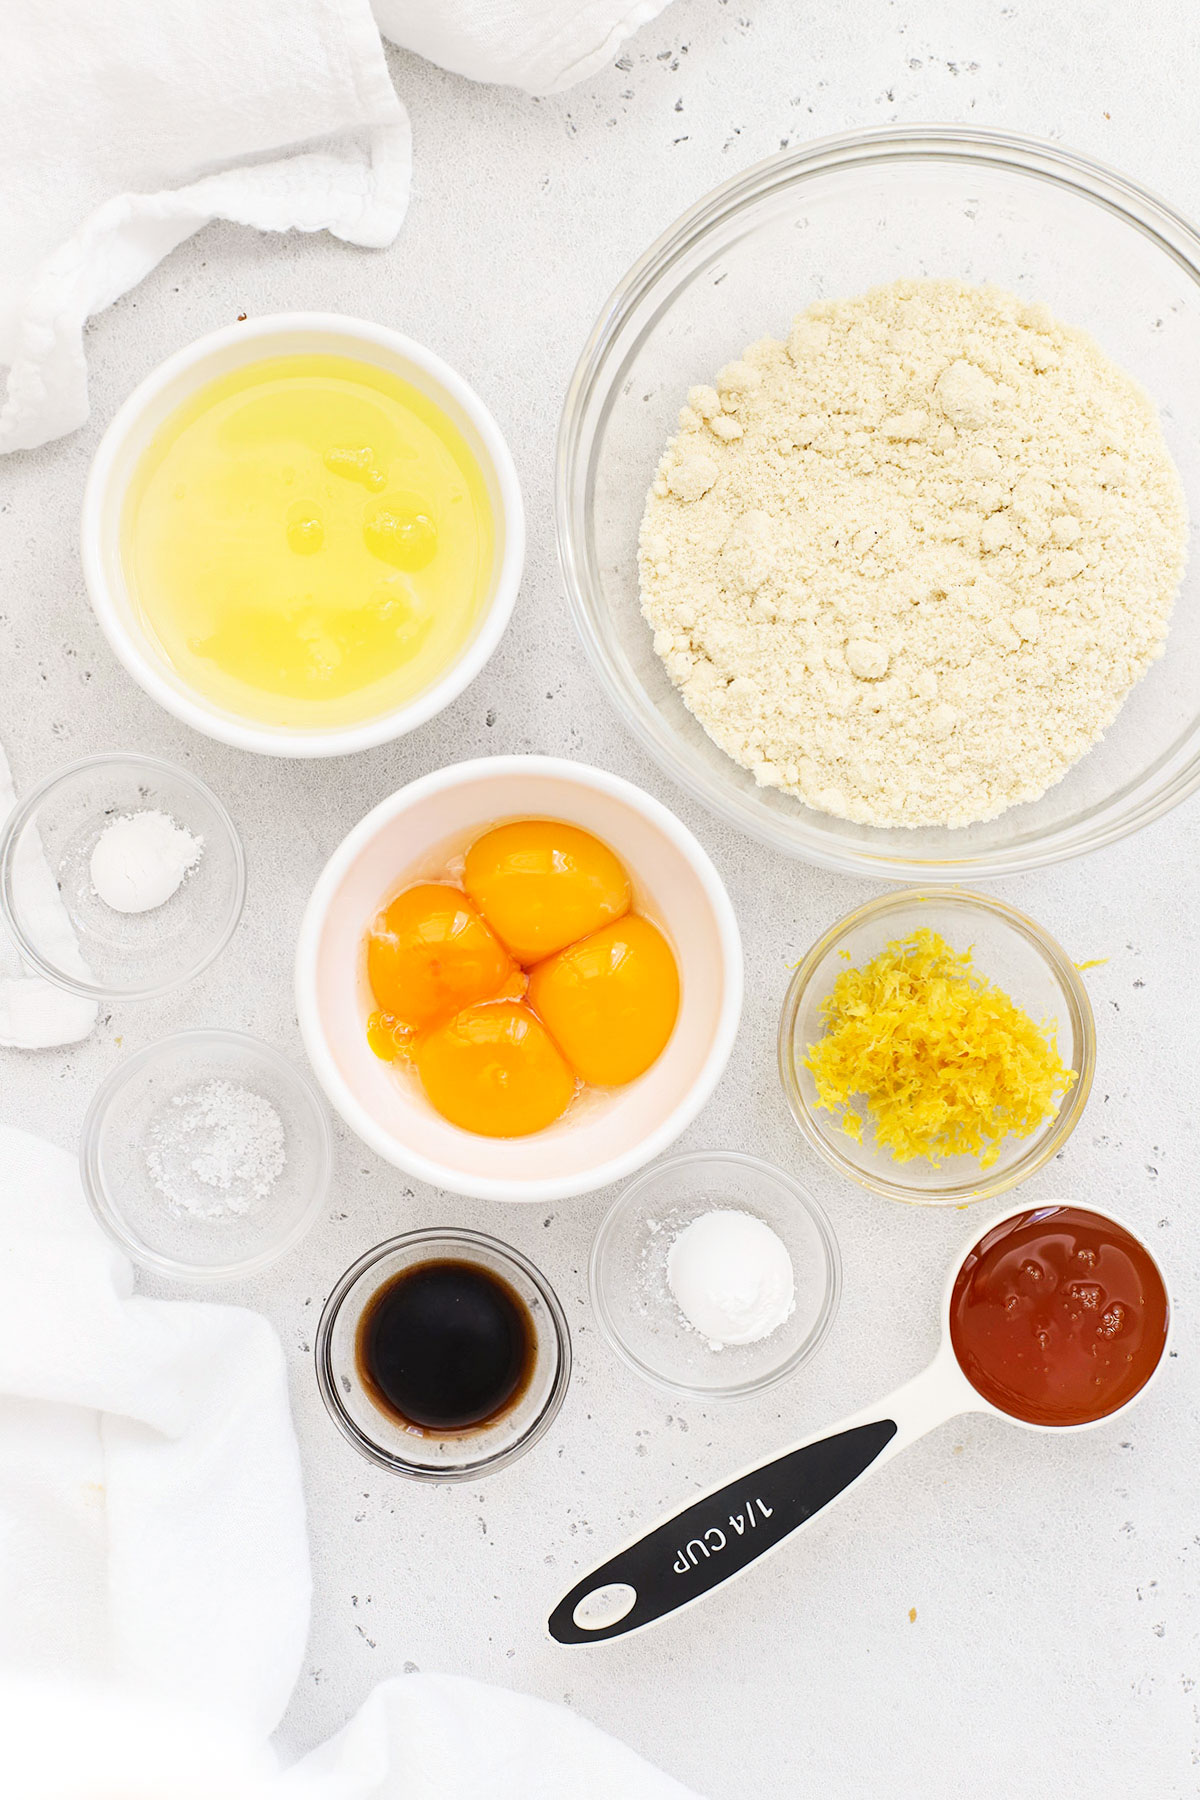 Ingredients for gluten-free almond flour lemon cake